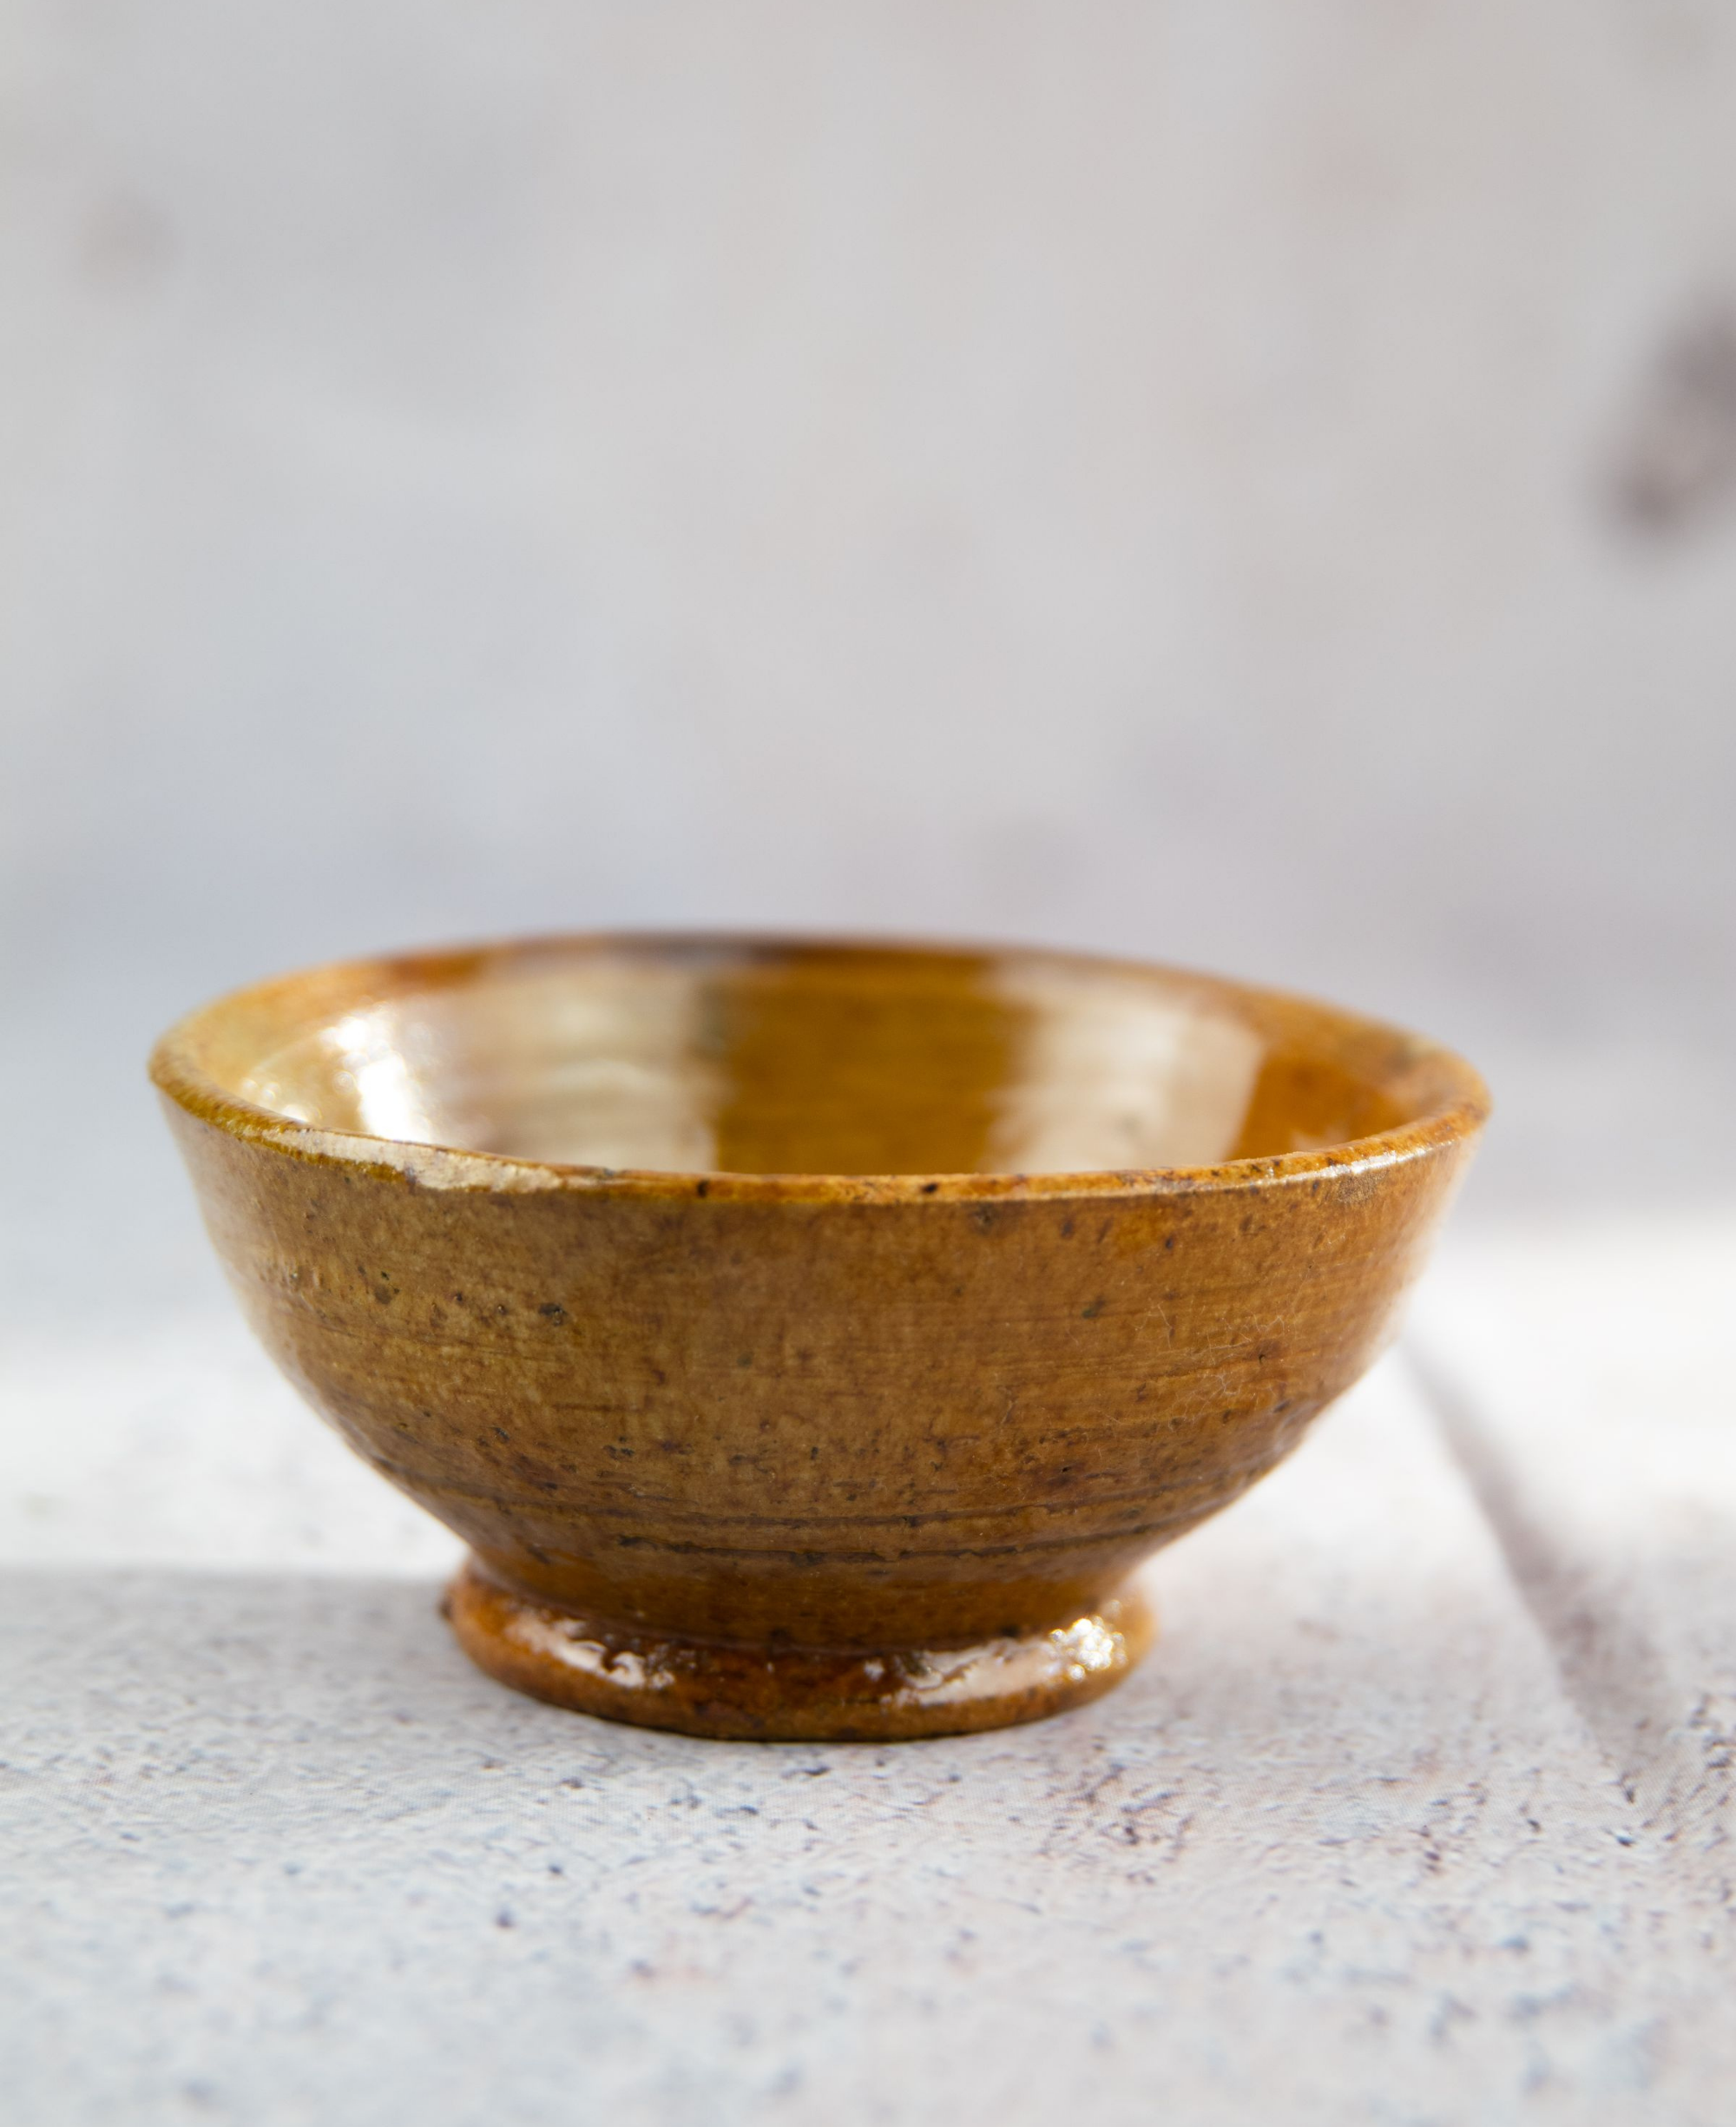 Handmade Moroccan Pottery Bowls